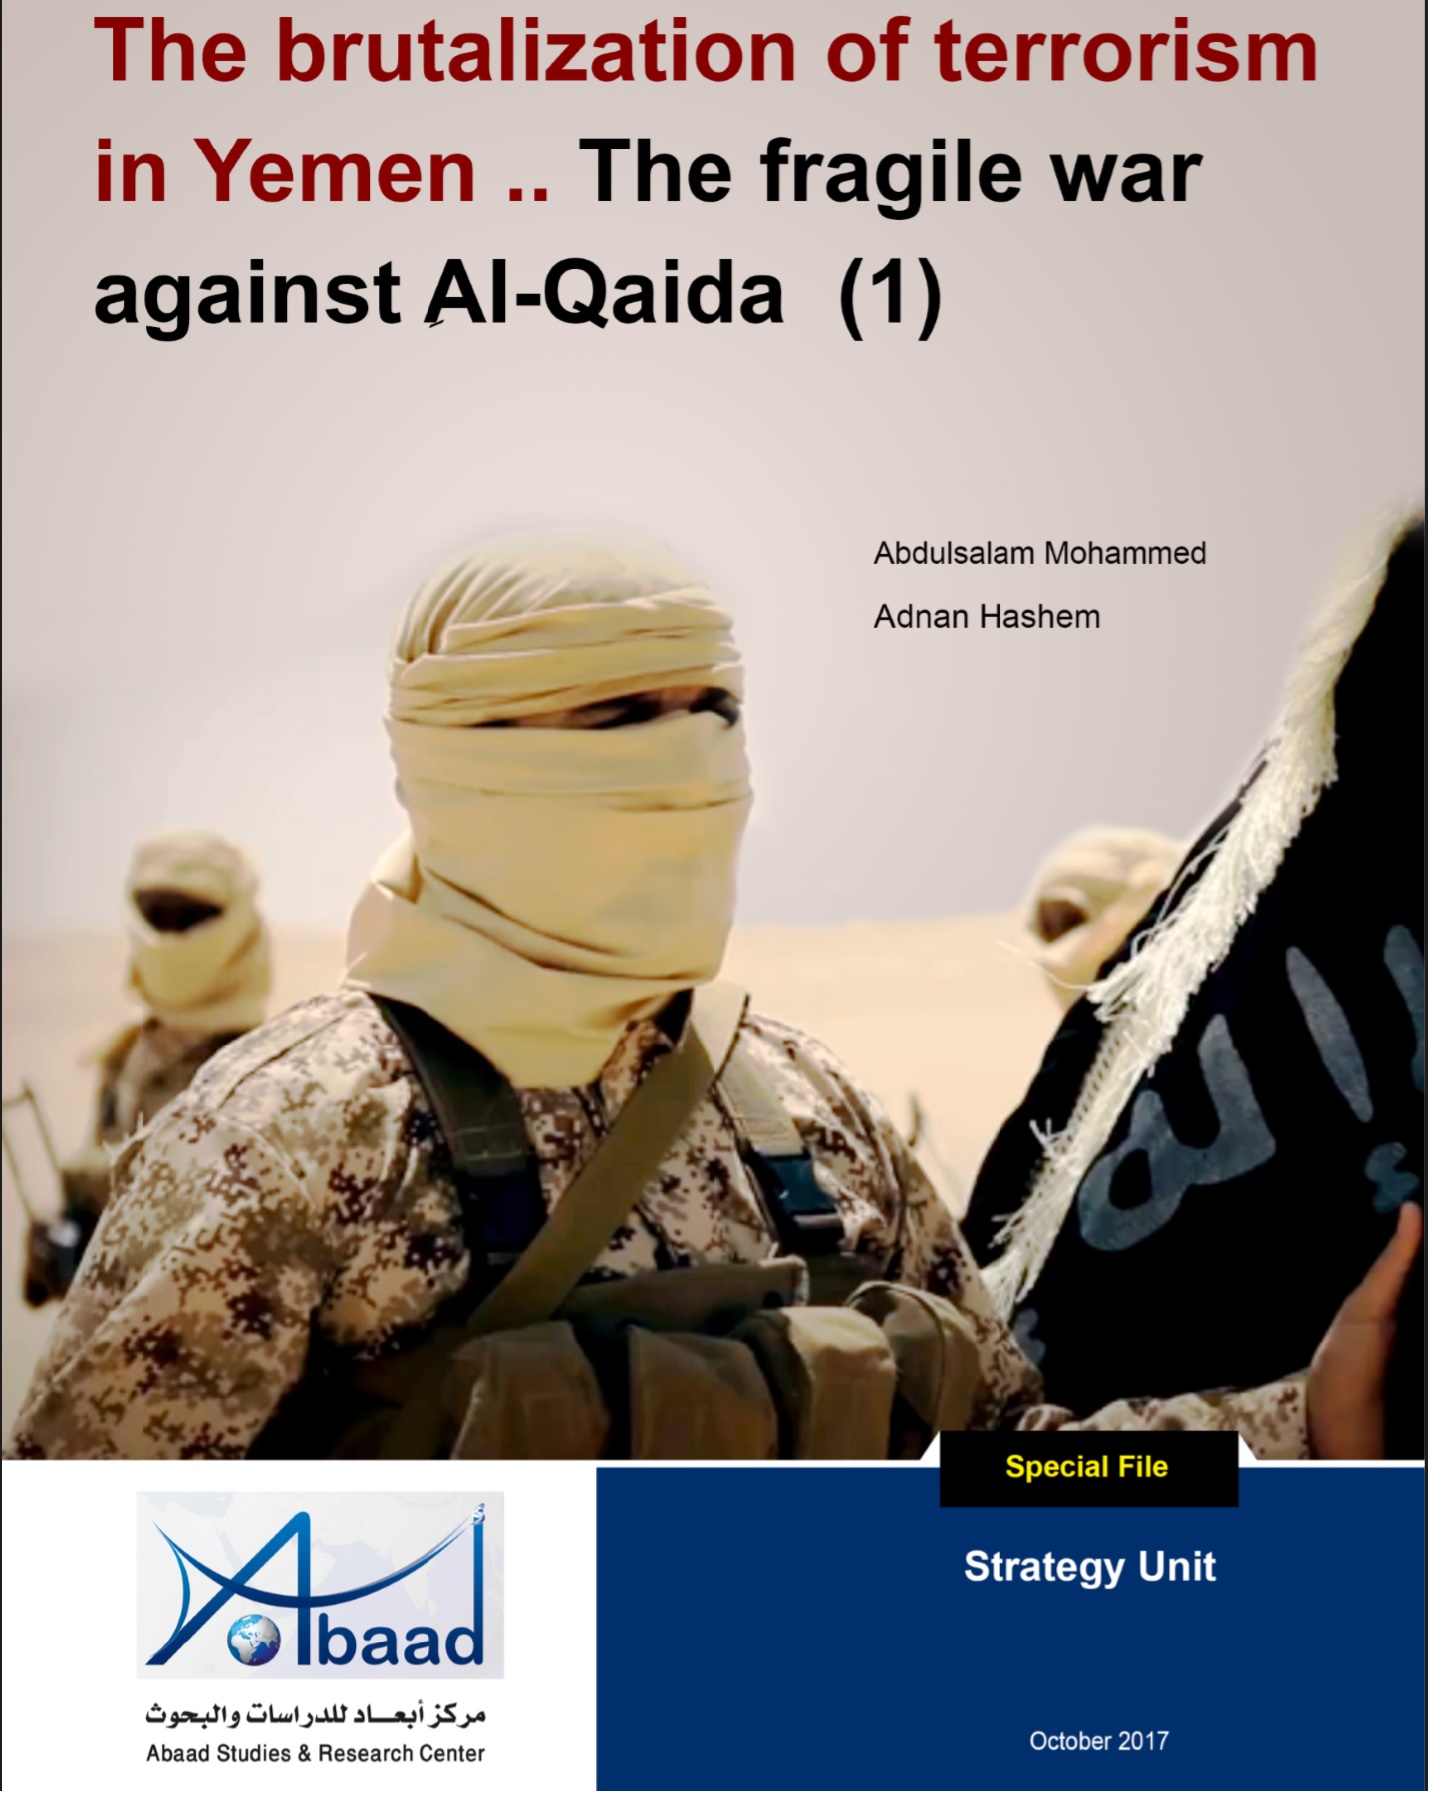  The brutalization of terrorism in Yemen-the fragile war against Al-Qaeda